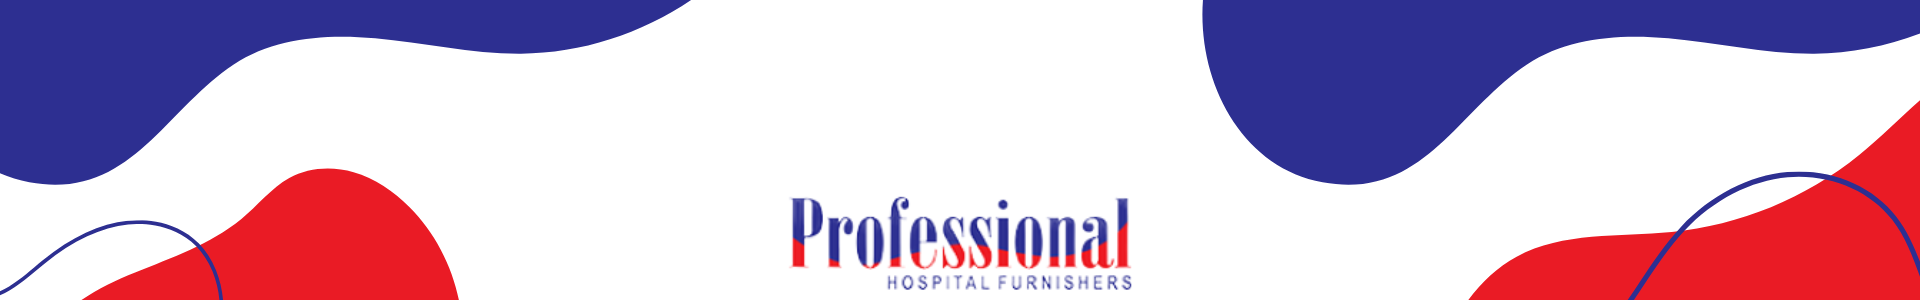 Marca Professional Hospital